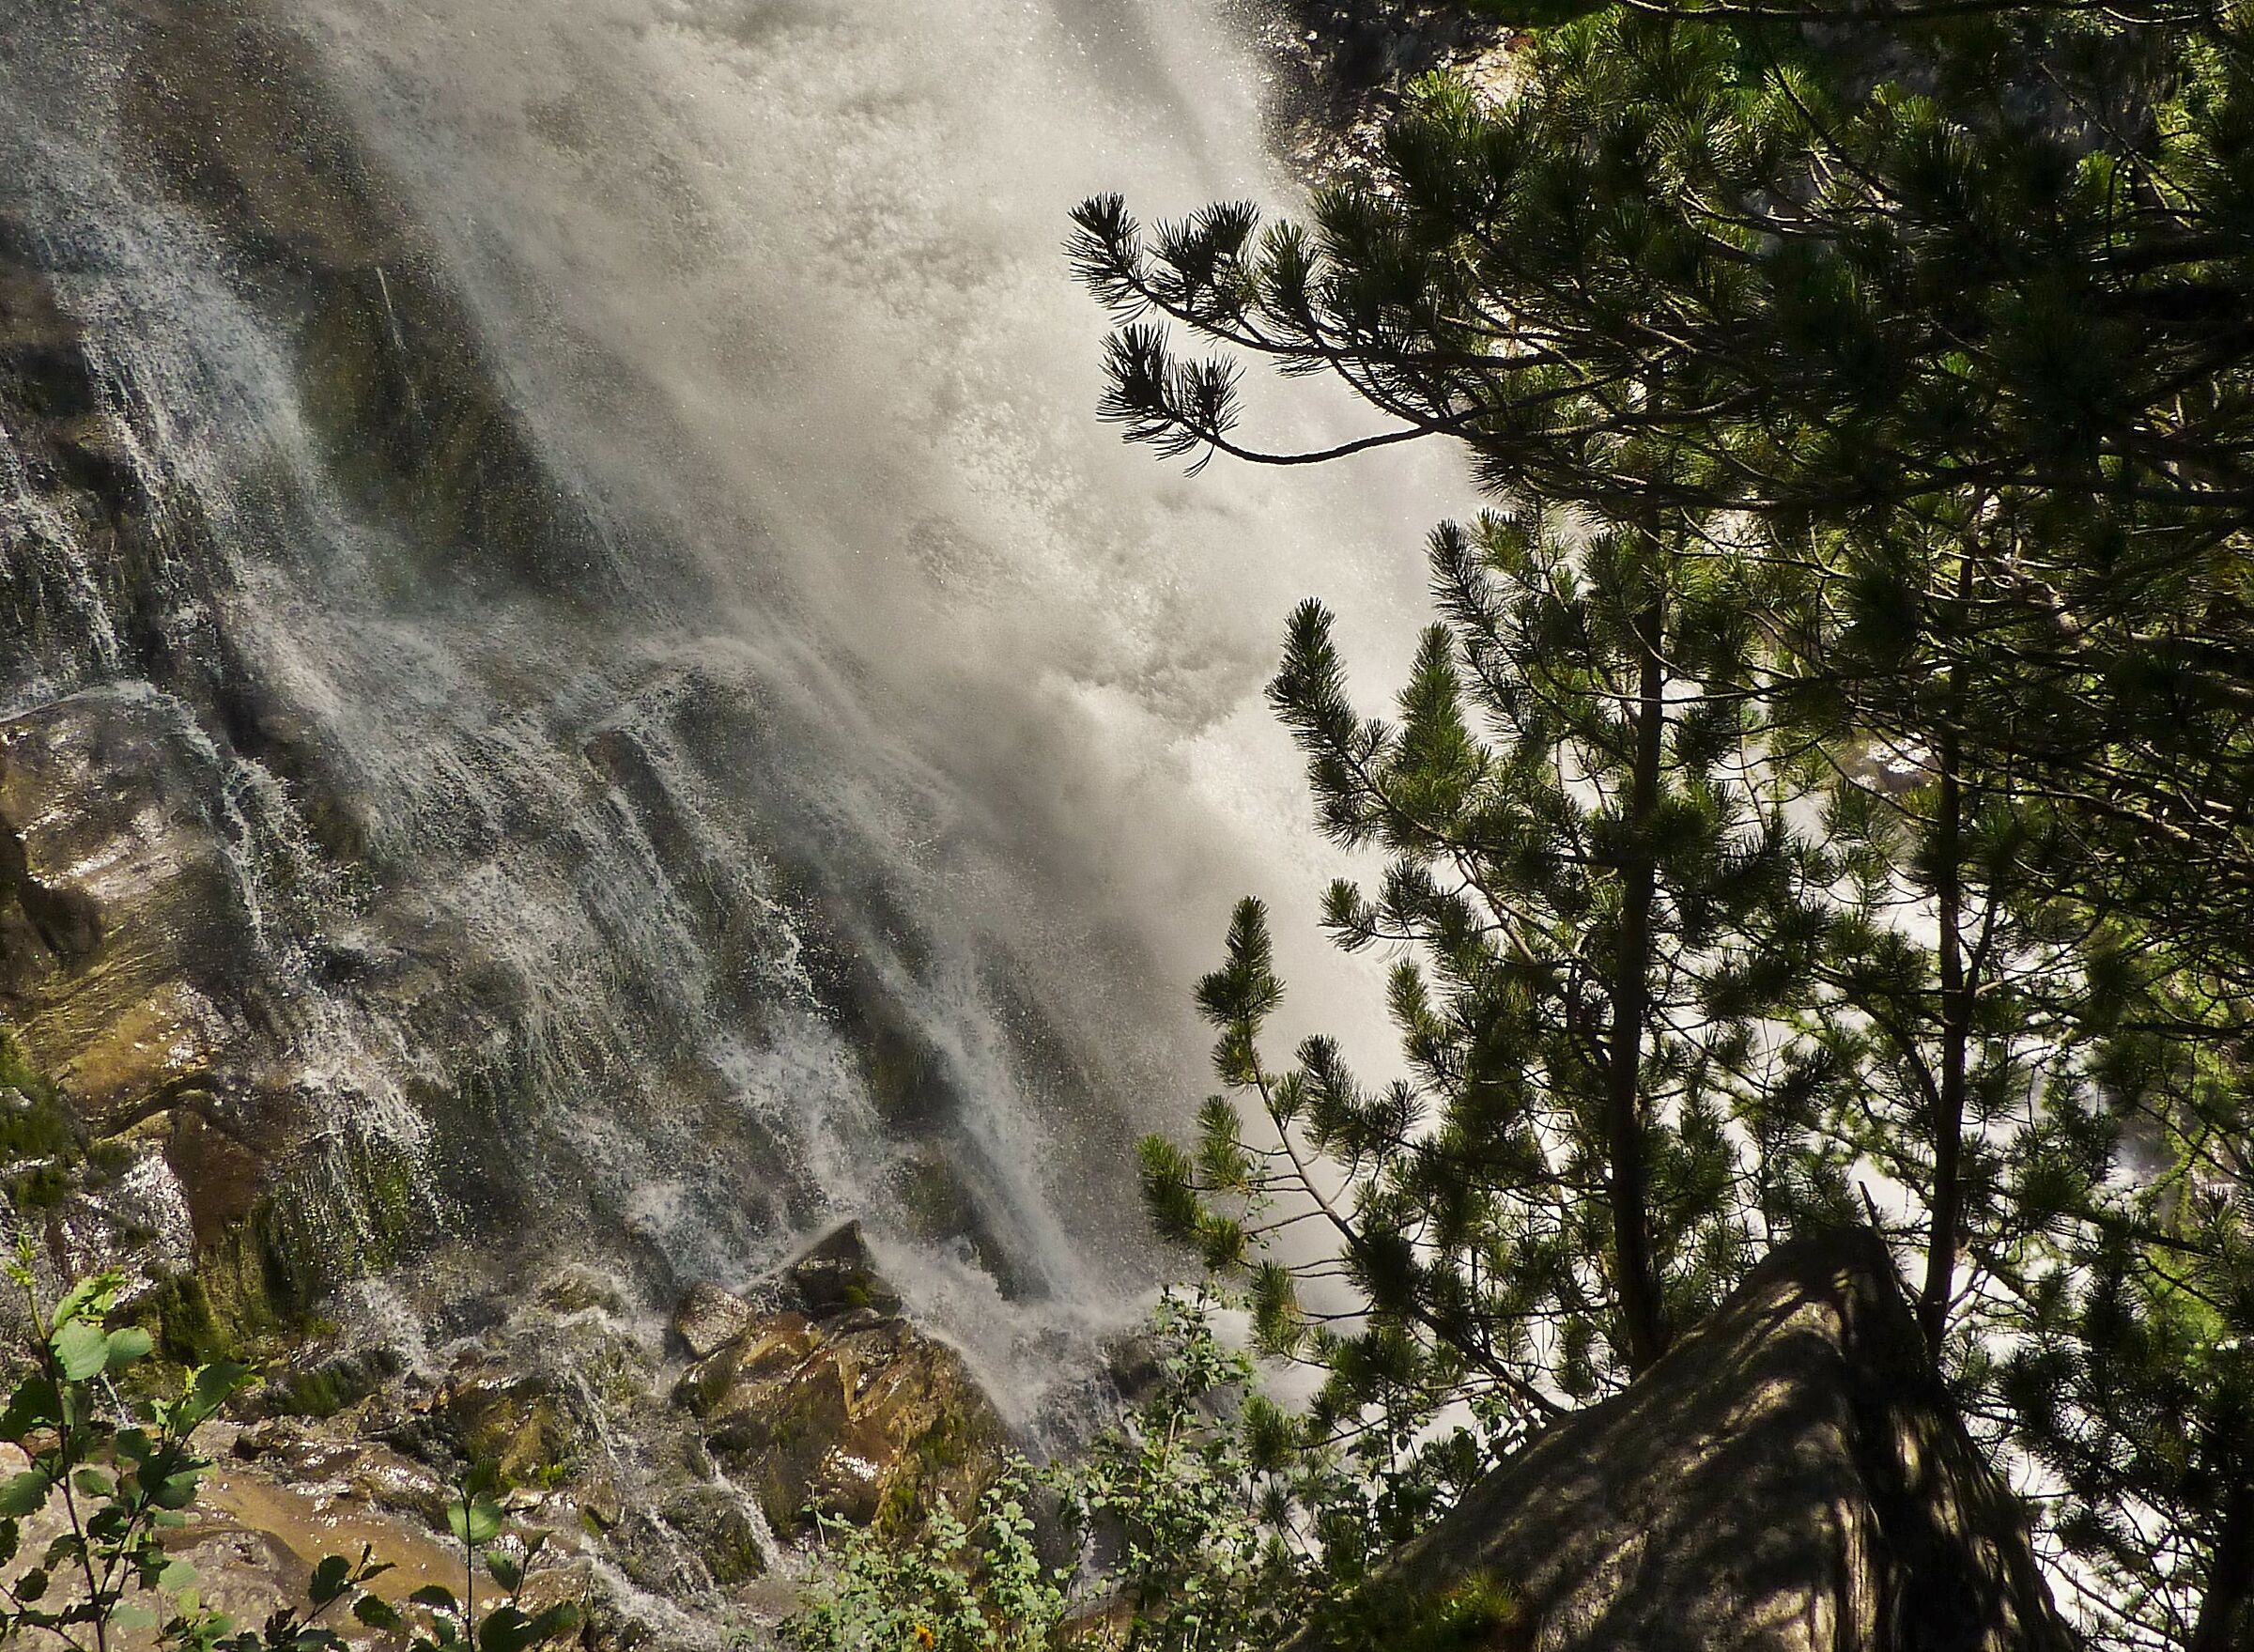  Rutor Waterfall...